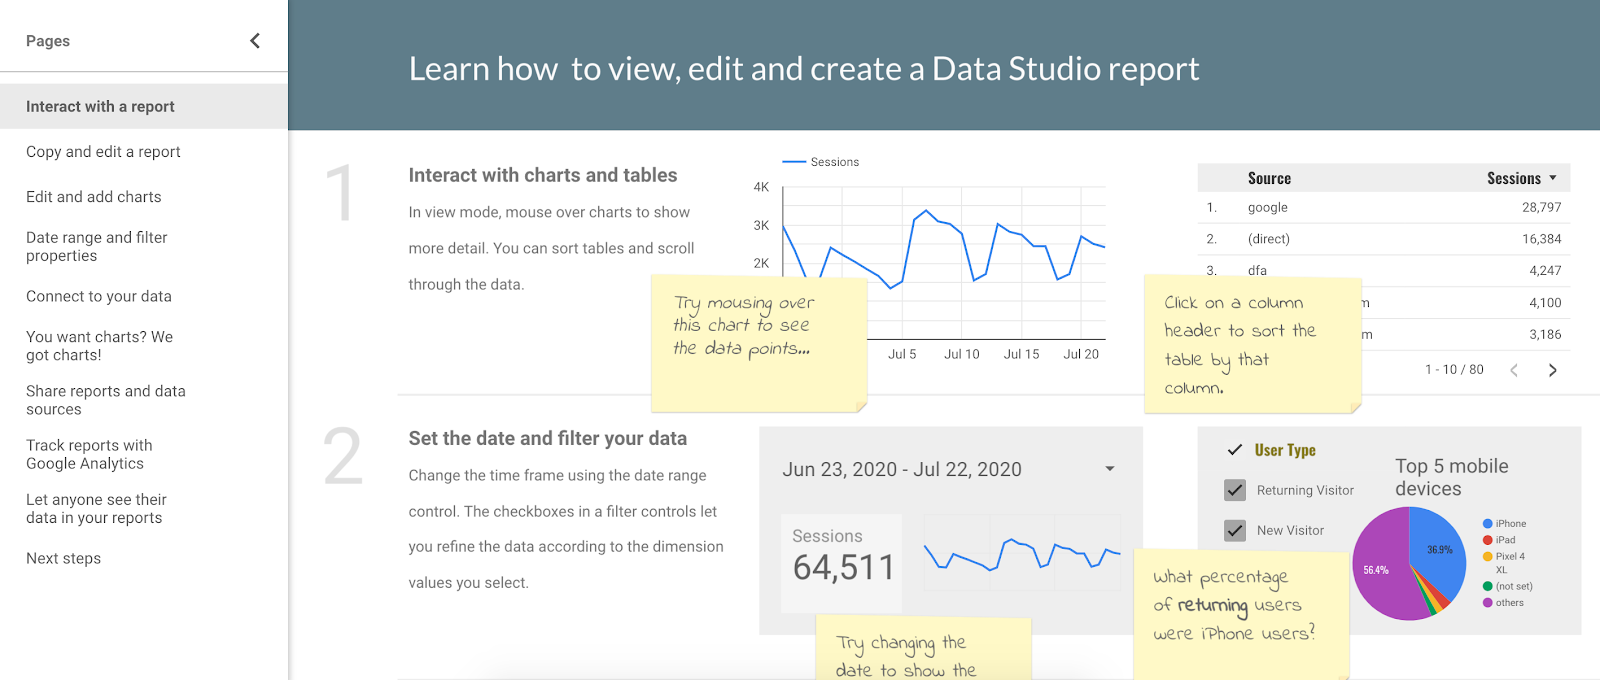 Screenshot of the Google Data Studio interface and tutorial